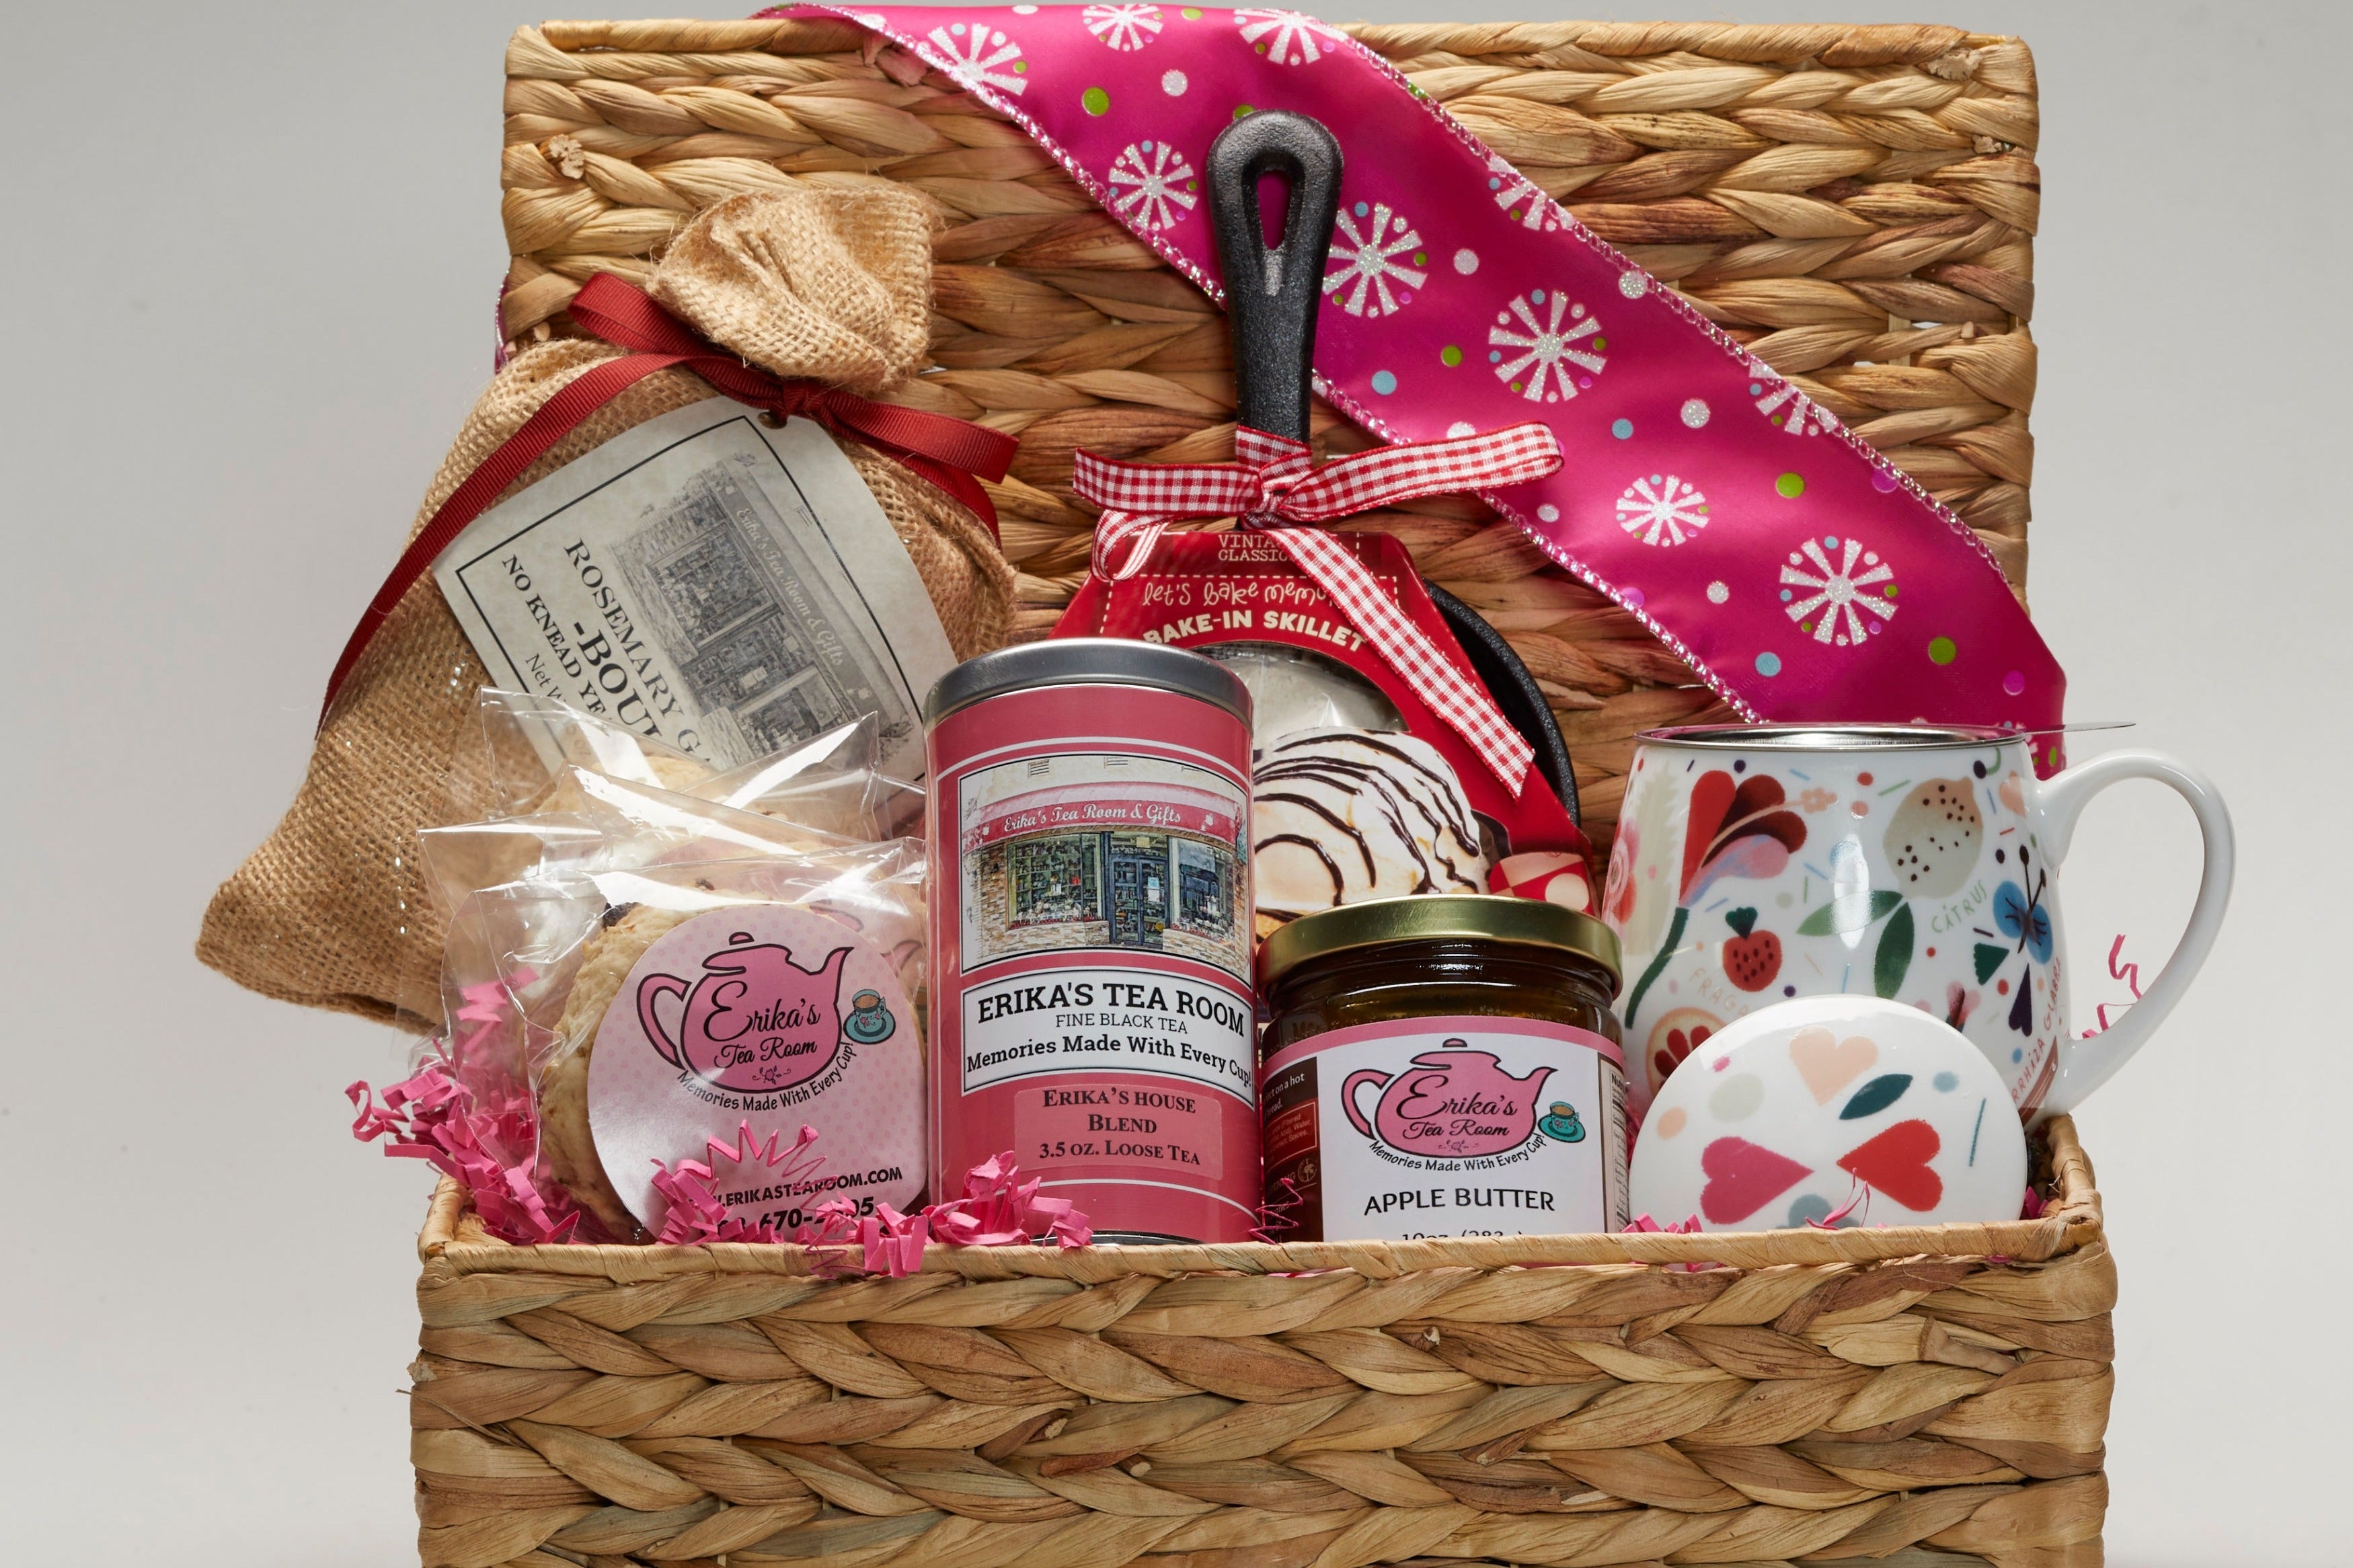 Tea mug gift set for mom - FREE SHIPPING – Rockymountain SereniTEA